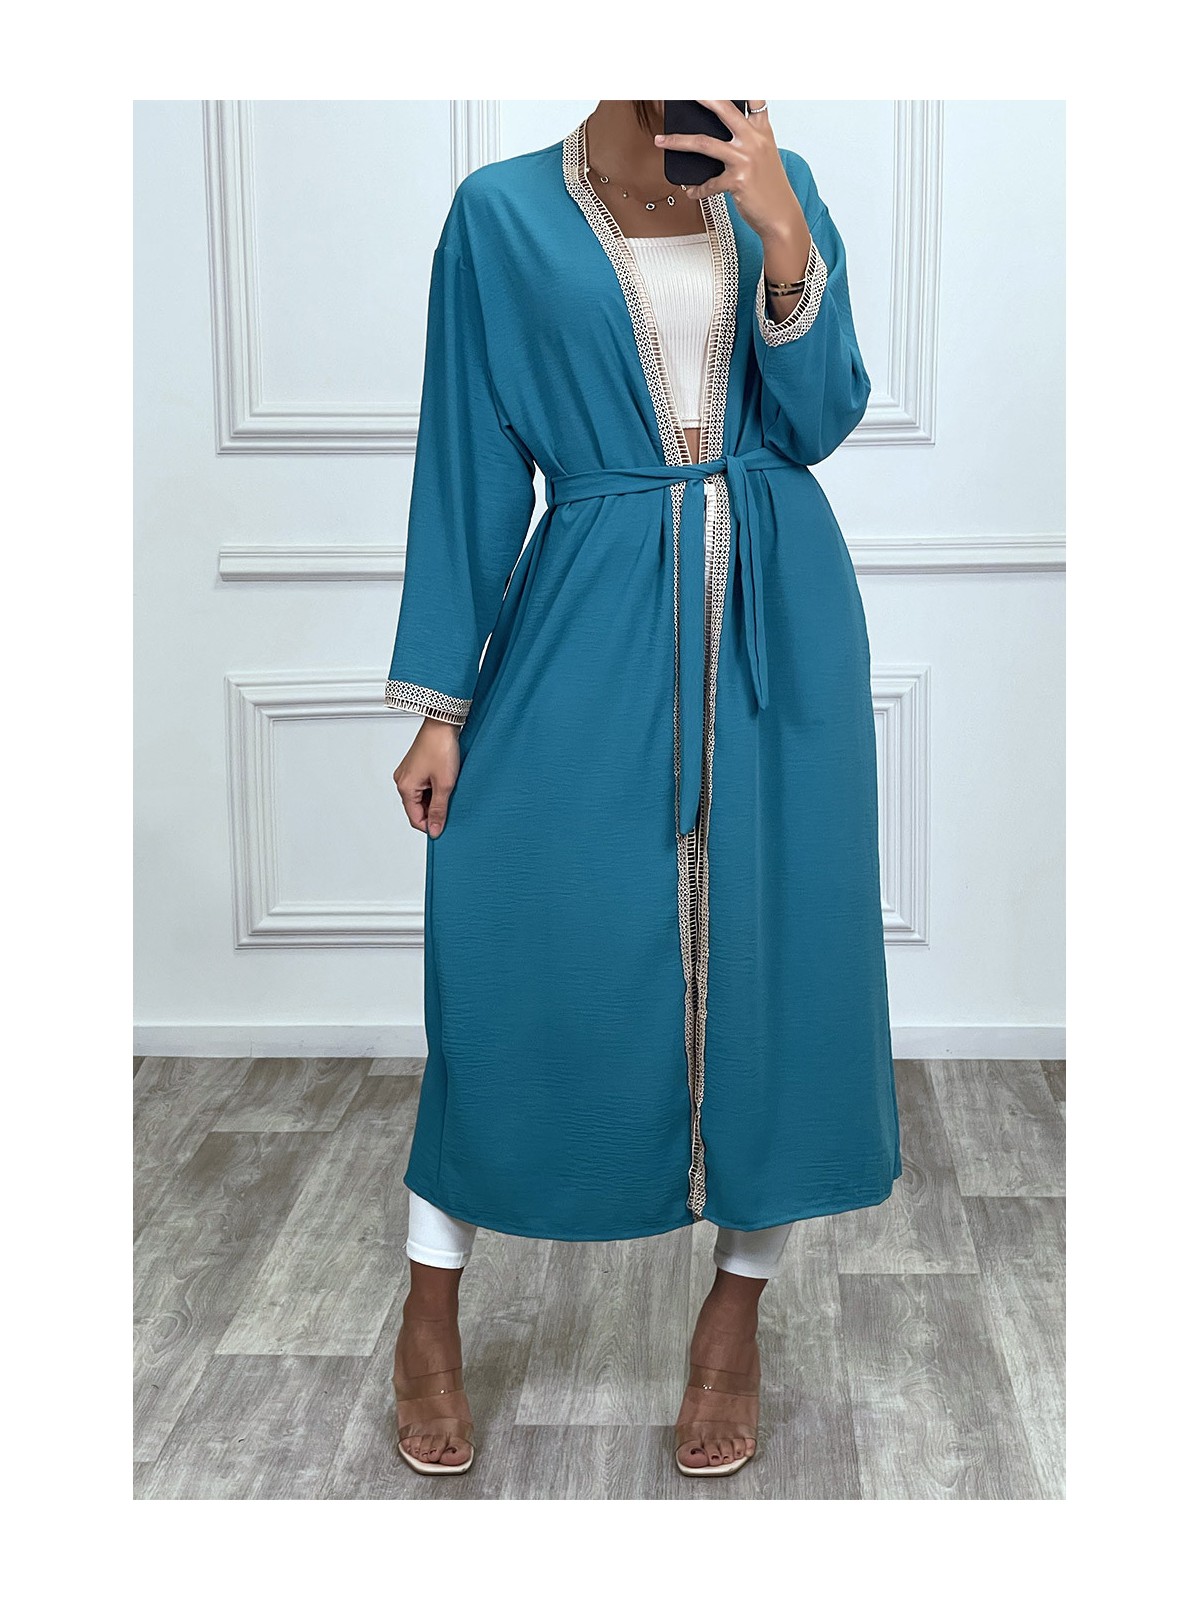 Kimono bleu canard à bordure brodé beige et ceinture - 8